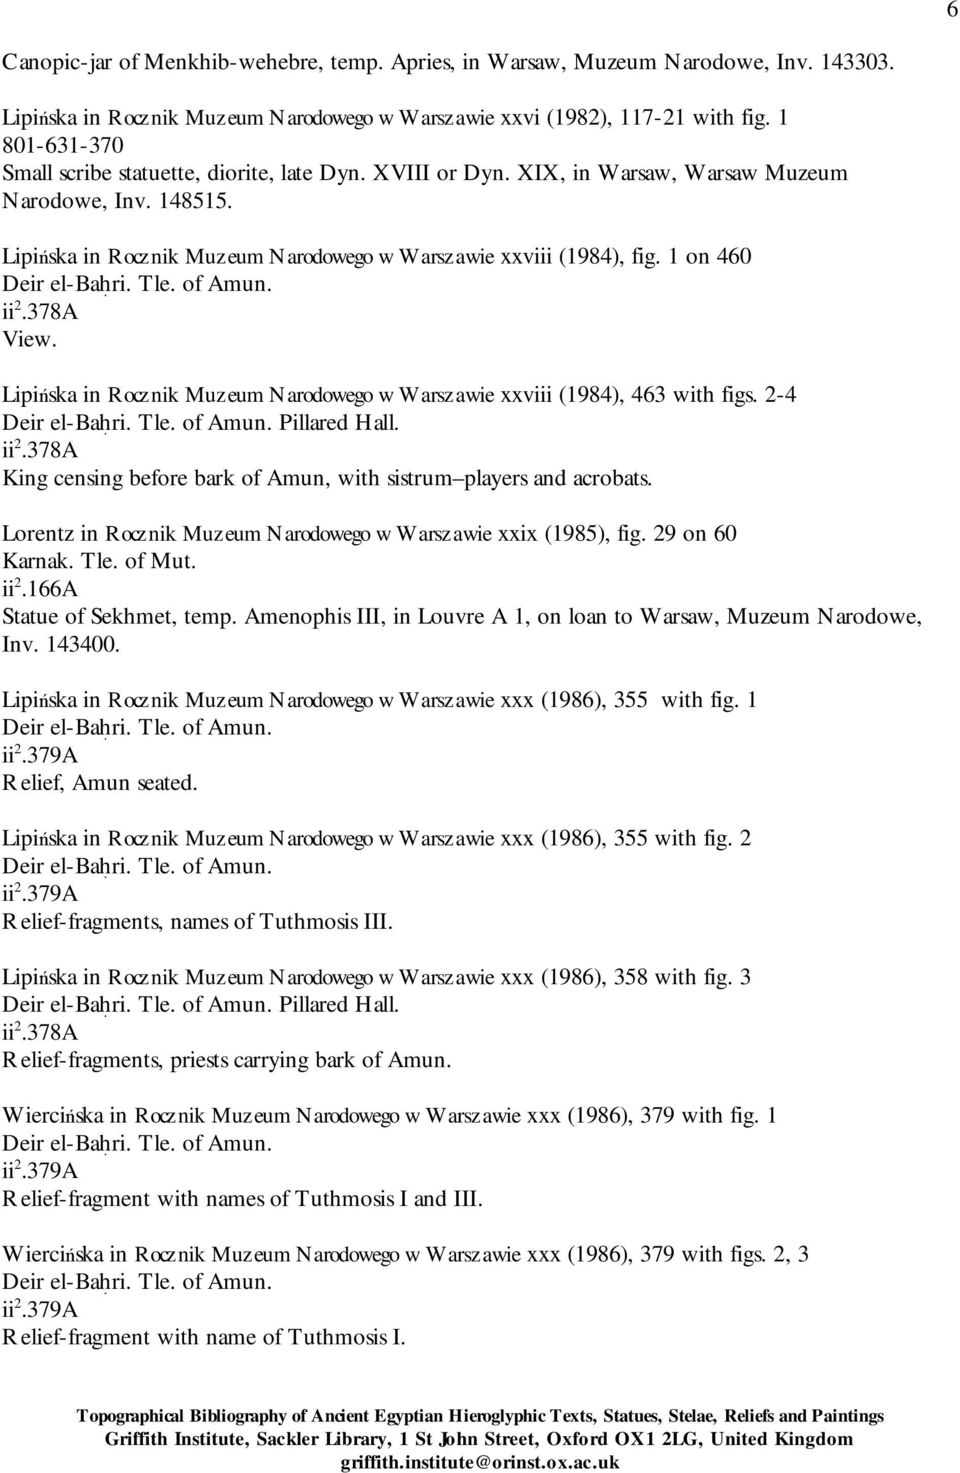 1 on 460 ii 2.37A View. Lipi ska in Rocznik Muzeum Narodowego w Warszawie xxviii (194), 463 with figs. 2-4 Pillared Hall. ii 2.37A King censing before bark of Amun, with sistrum players and acrobats.